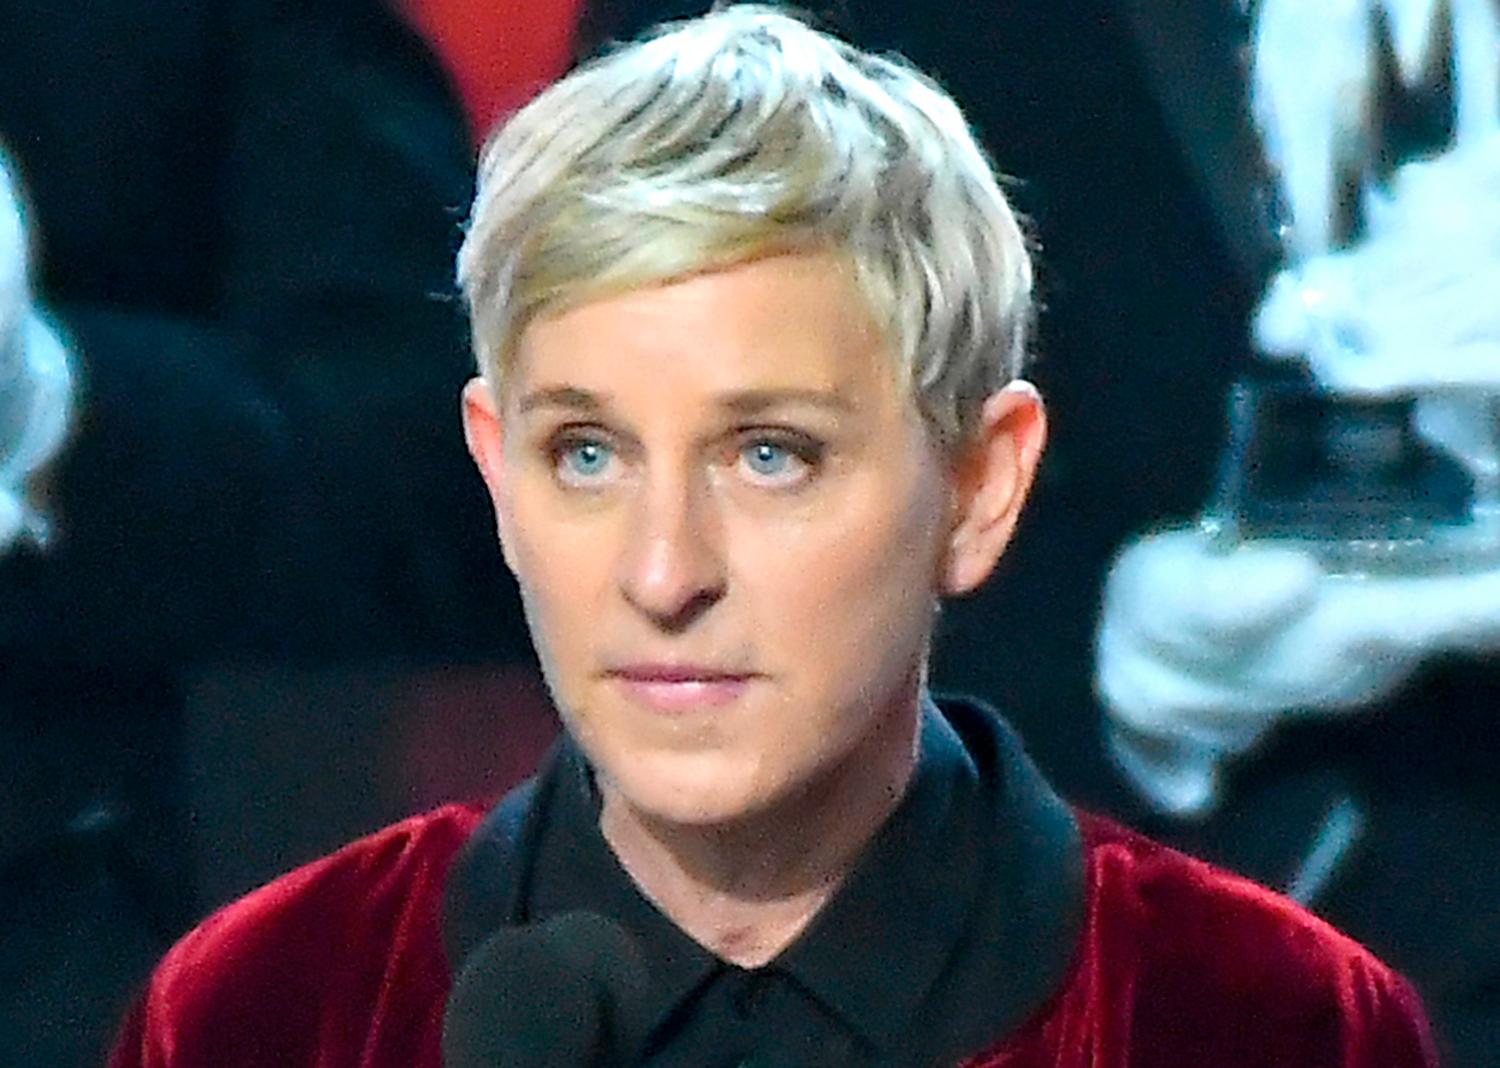 Det har stormat kring Ellen DeGeneres den senaste tiden.